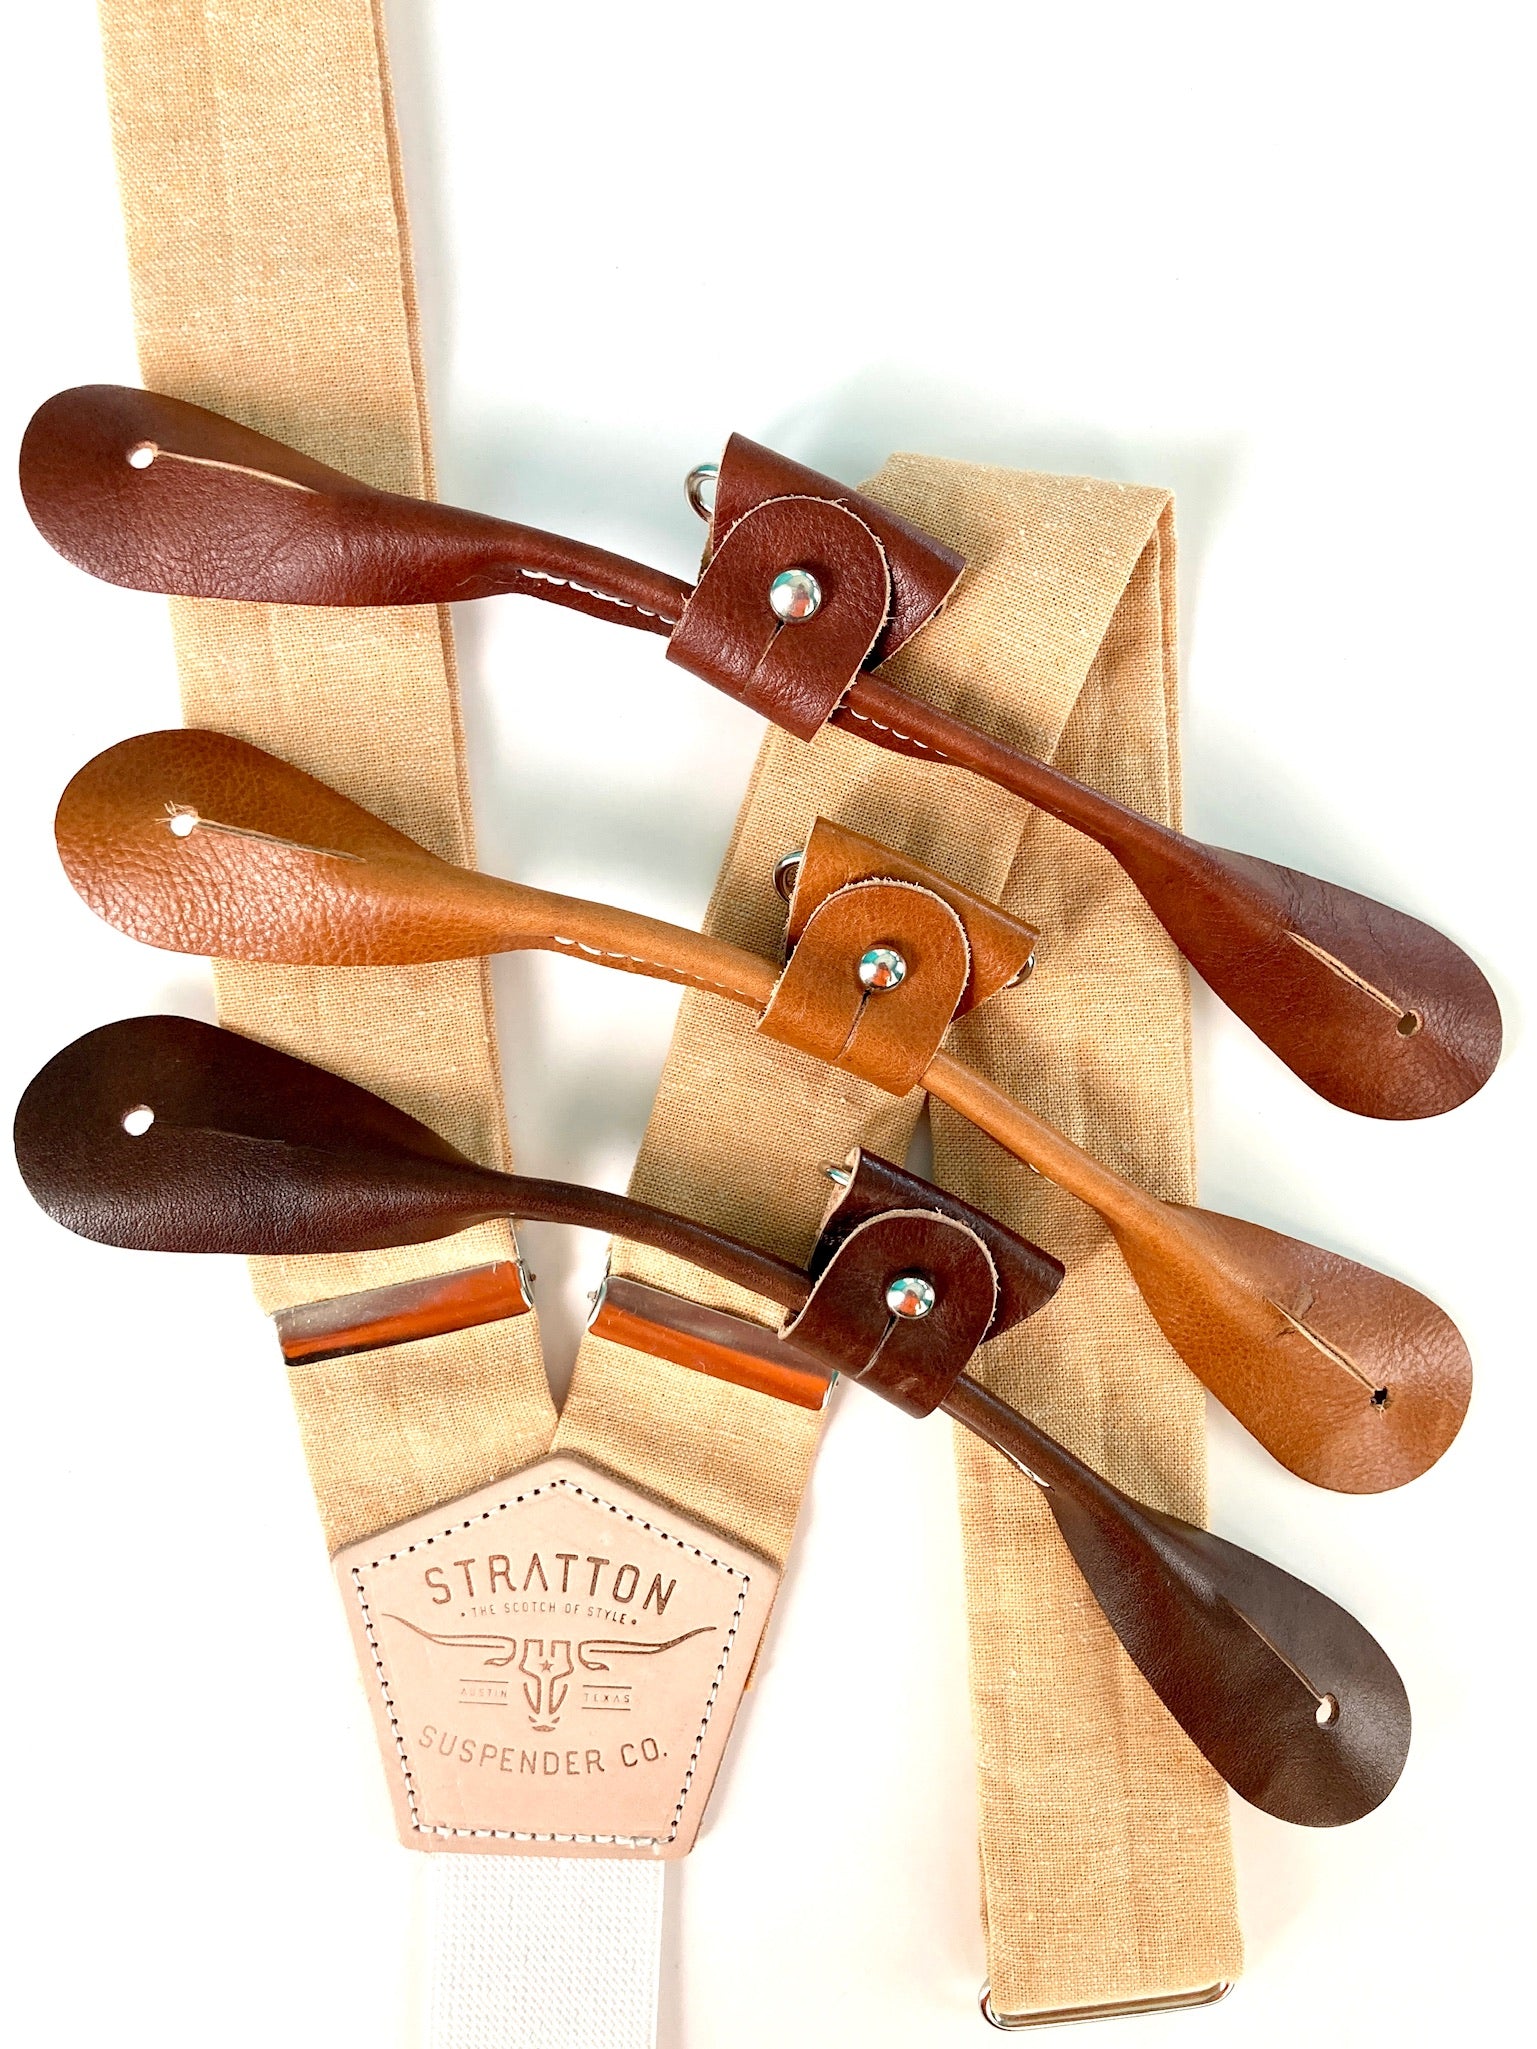 Stratton Suspender Co. Button On Set in El Paso Orange Linen featuring Tan, Cognac, and Chocolate Italian Pontedero Leather